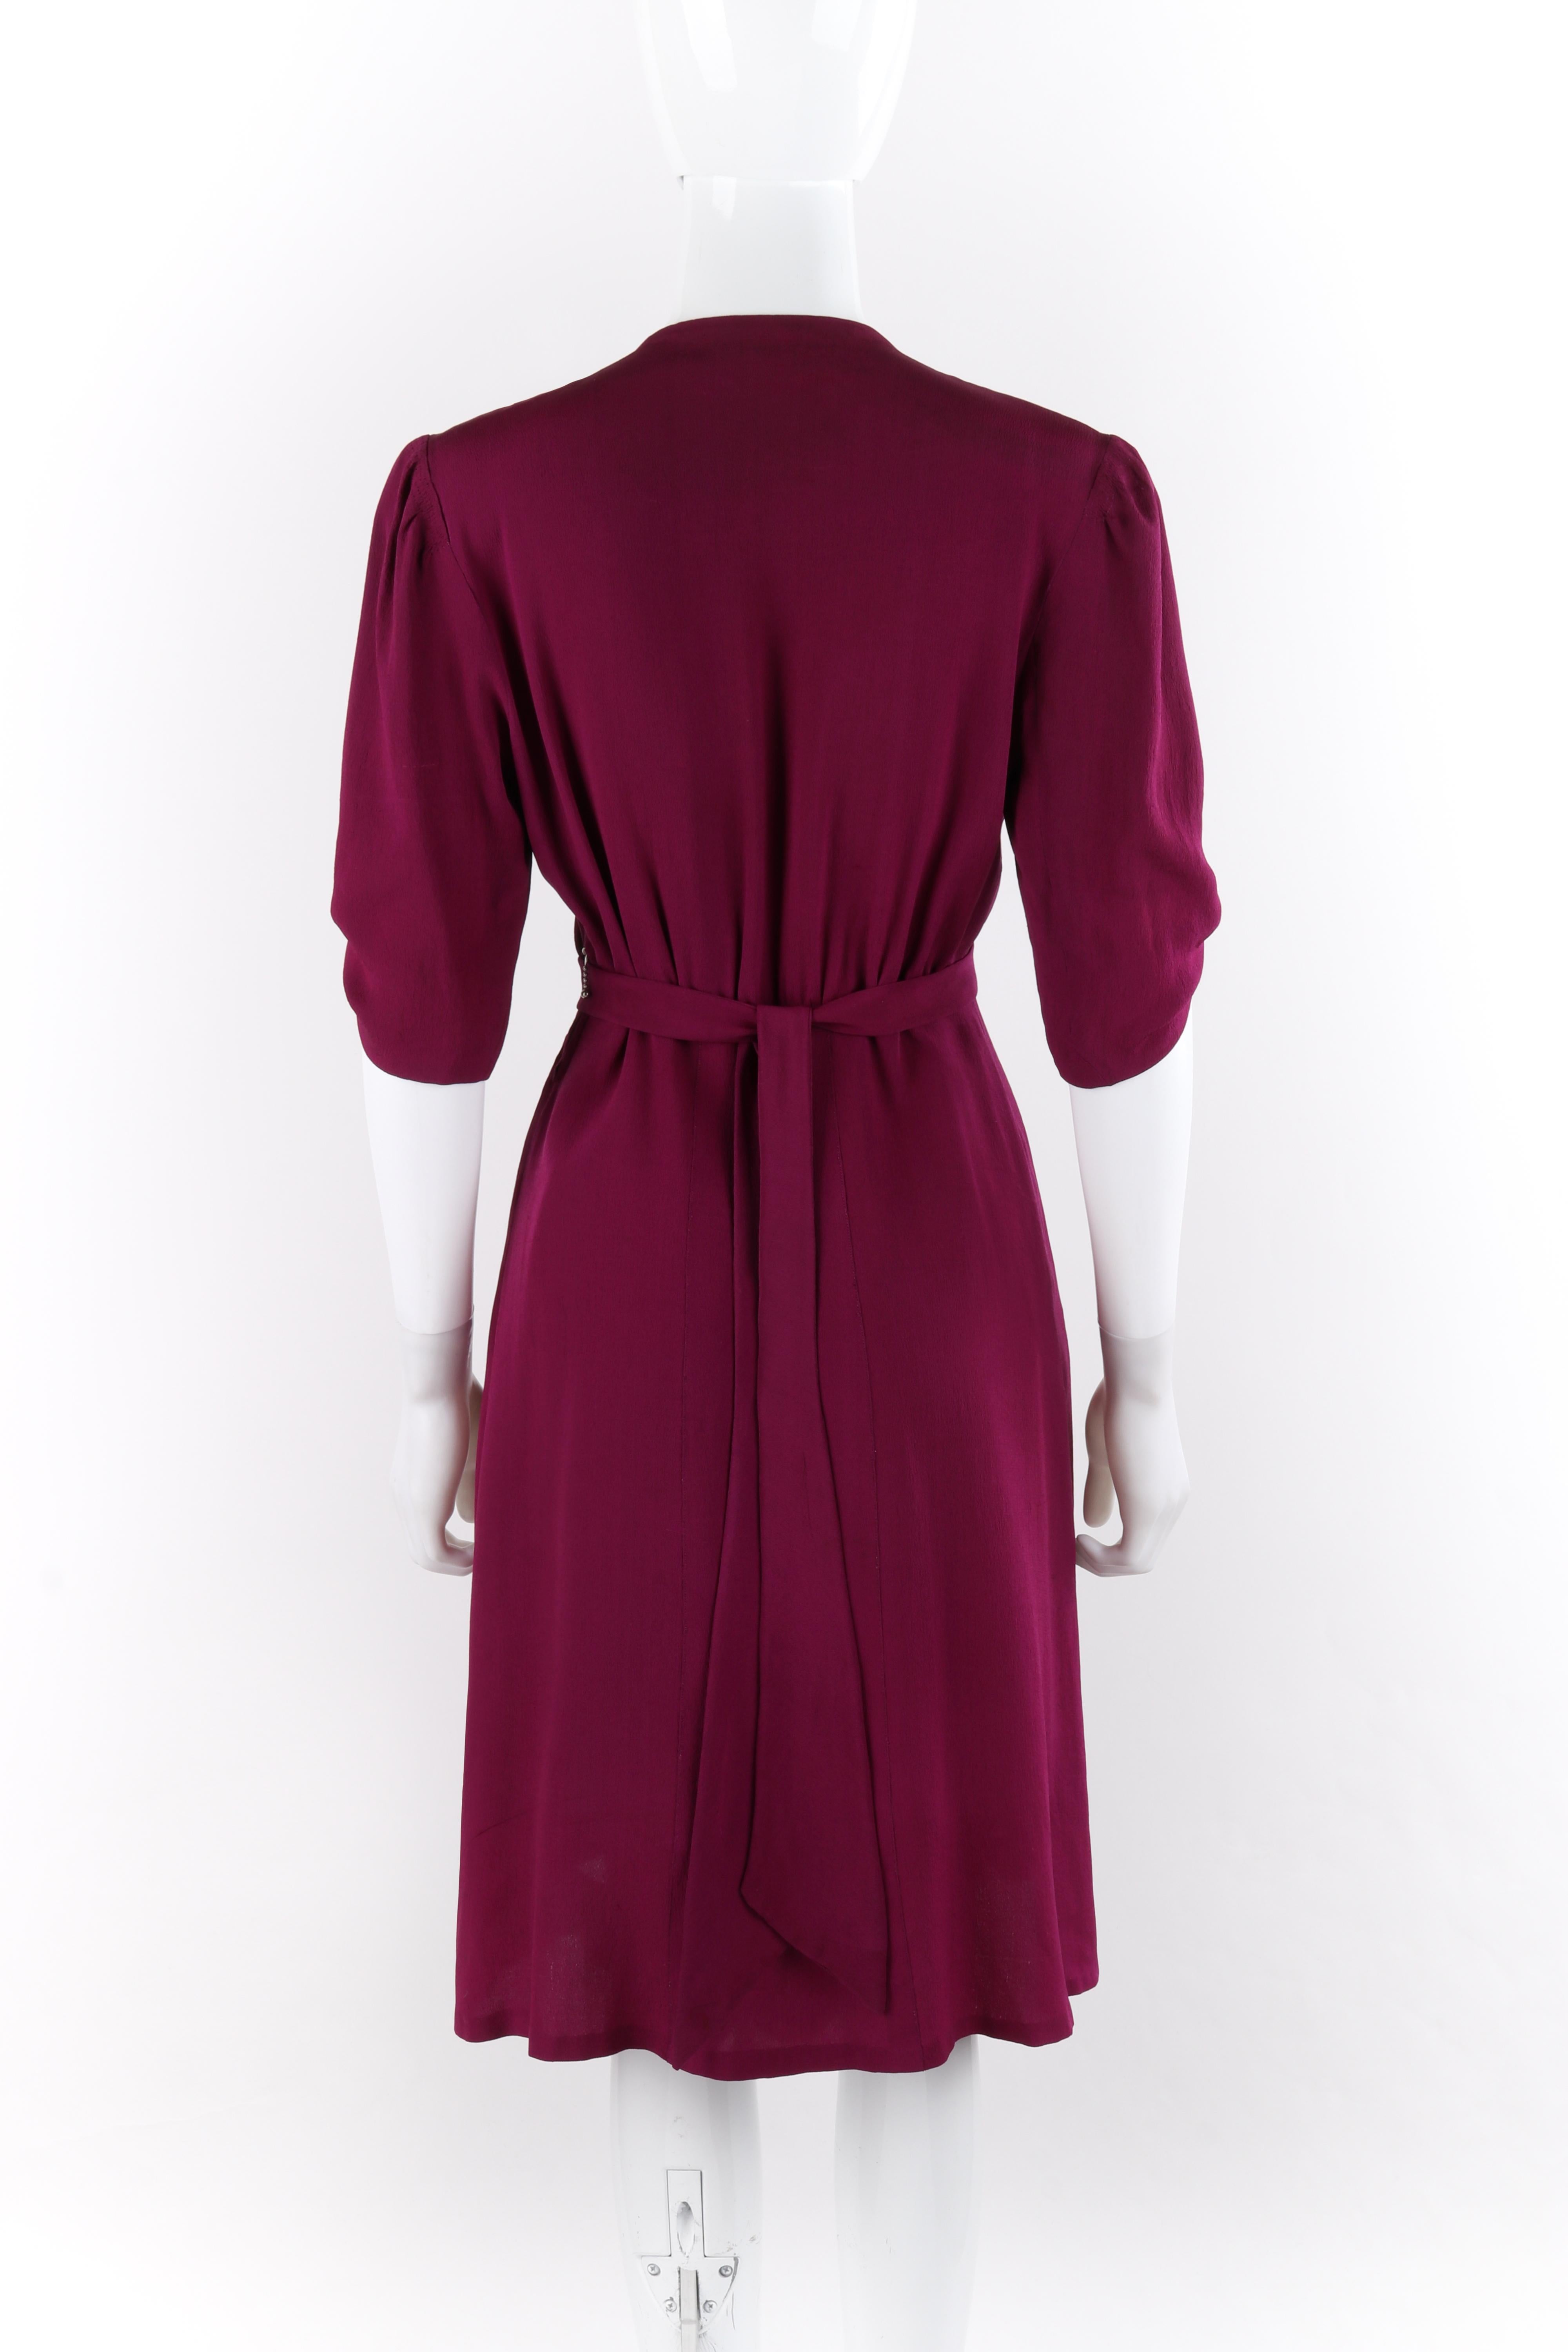 Purple ELSA SCHIAPARELLI c.1930's Magenta Smocked Braided Trim Belted Dress Early Label